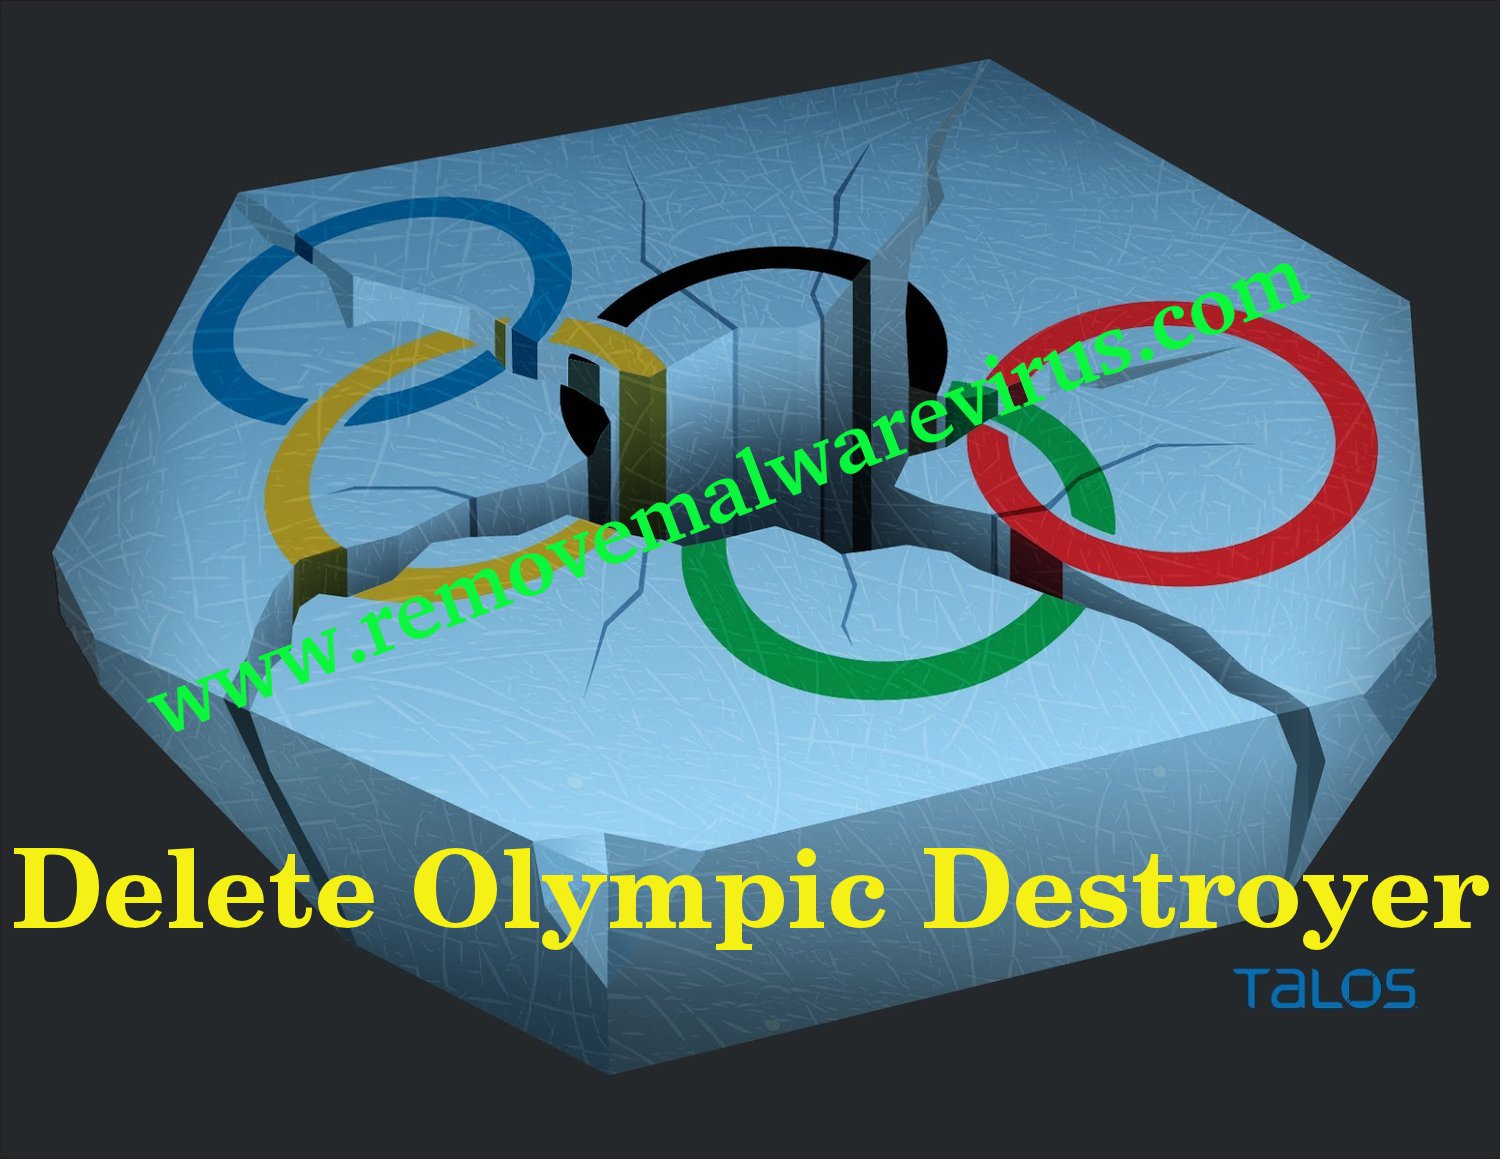 Supprimer Olympic Destroyer